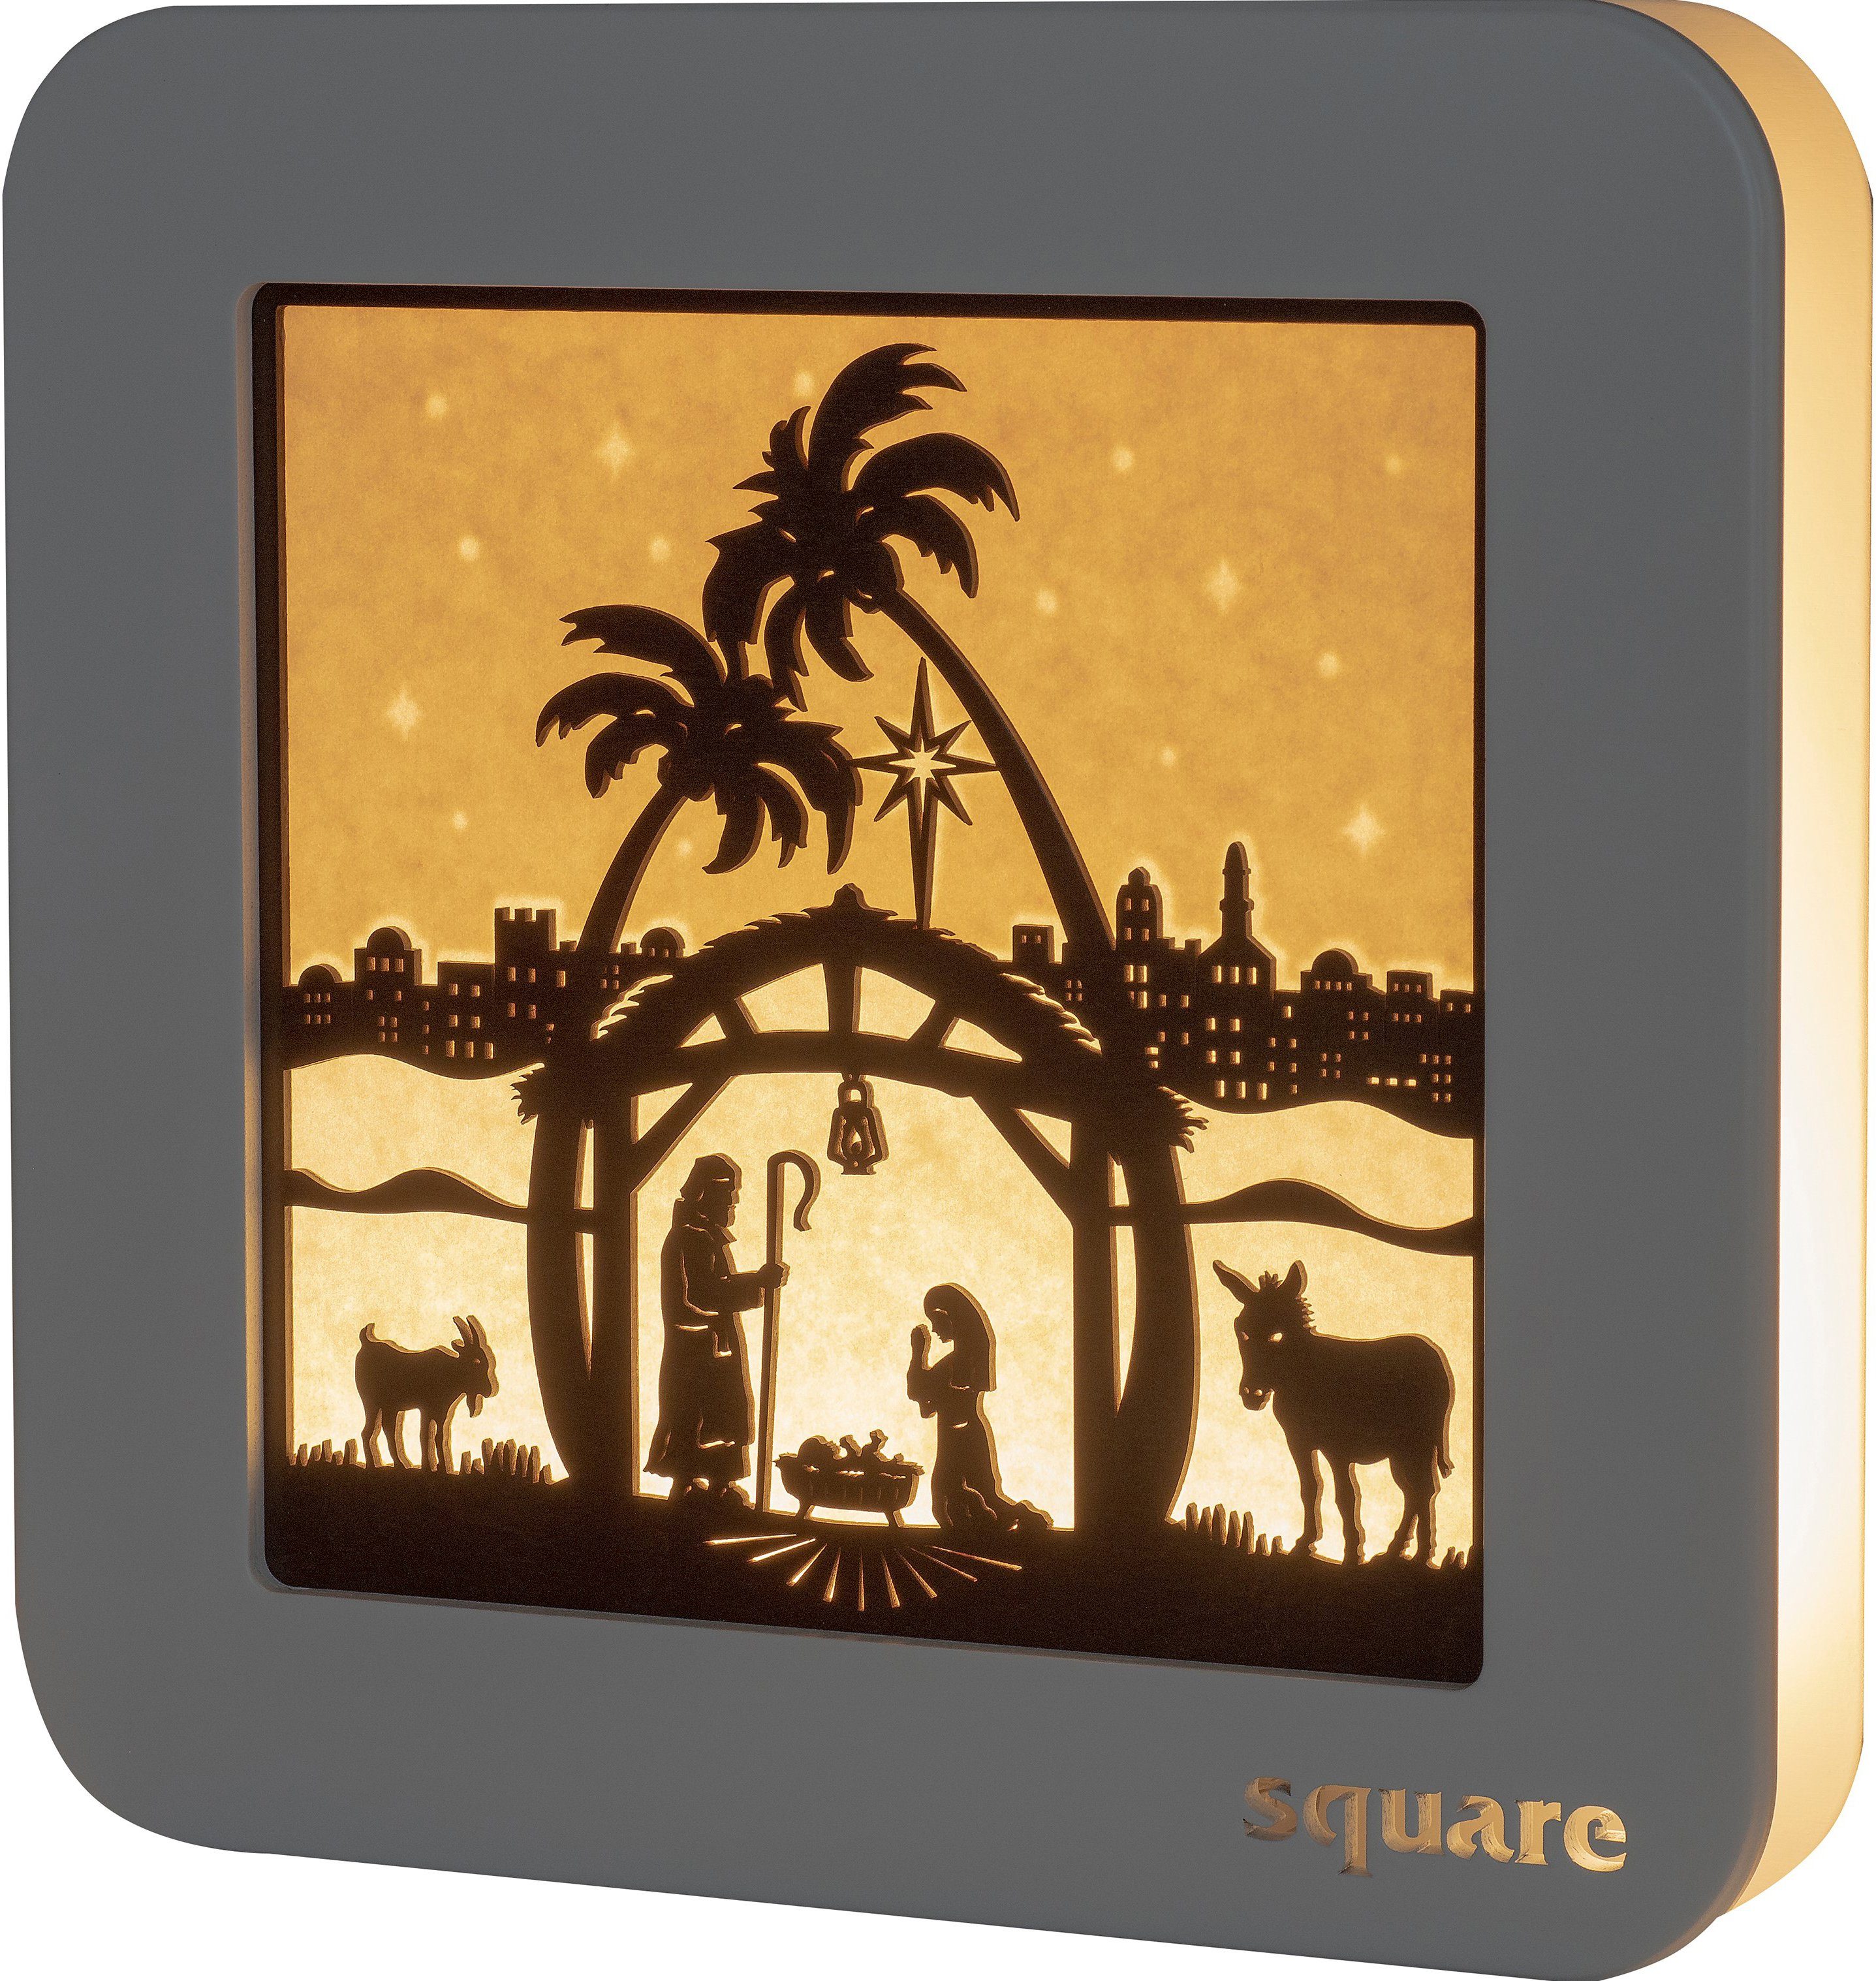 Weigla LED-Bild Square - Standbild mit Weihnachtsdeko, Timer Geburt, (1 Christi St)